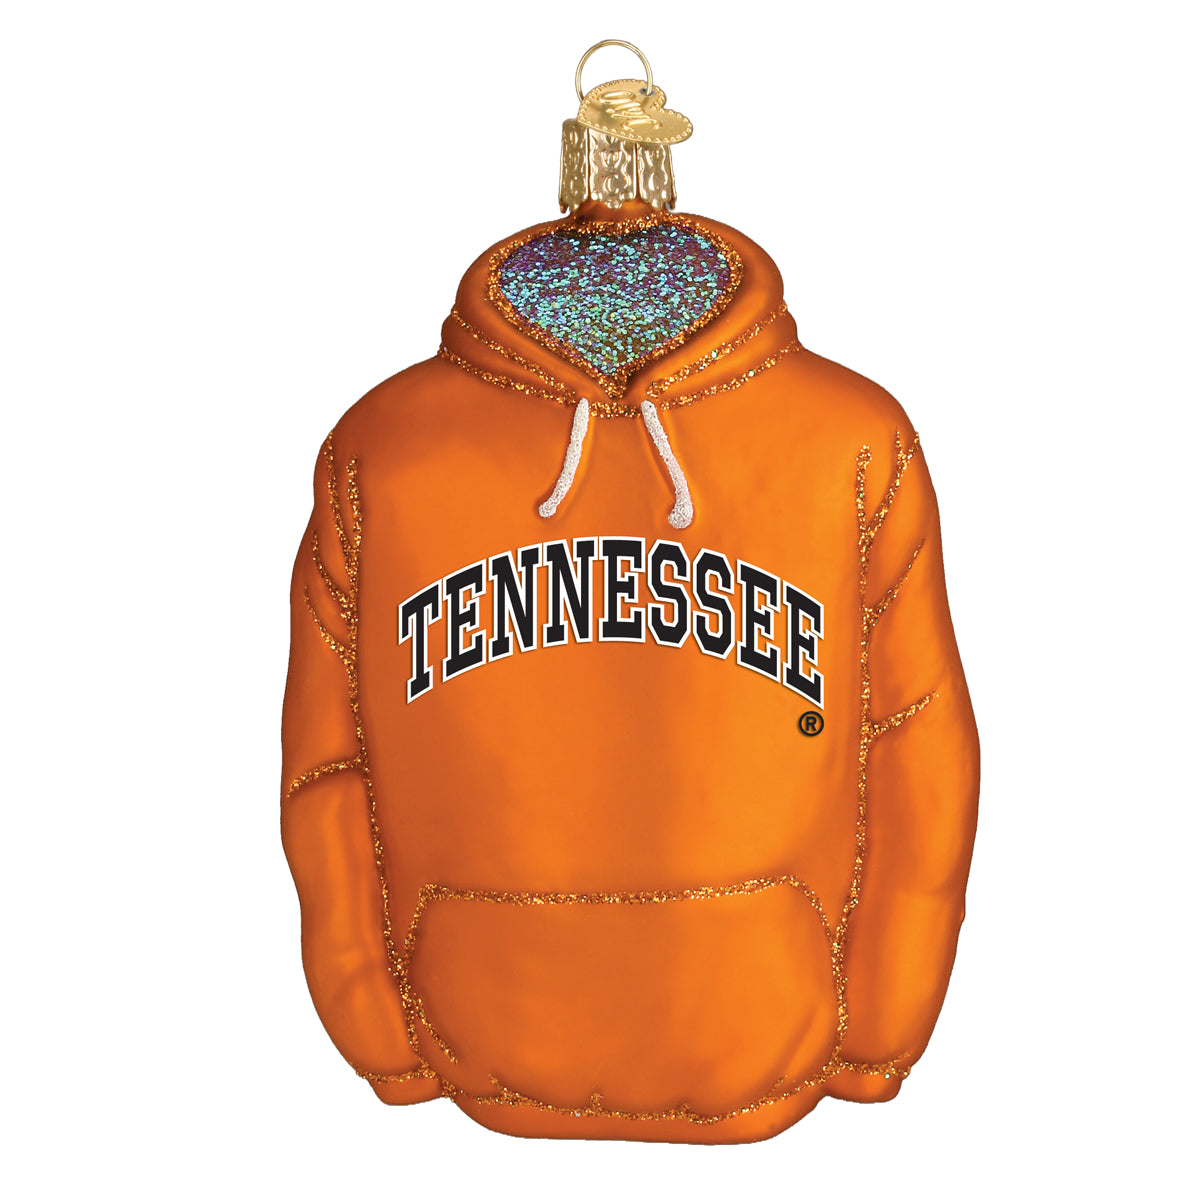 Tennessee Hoodie Ornament